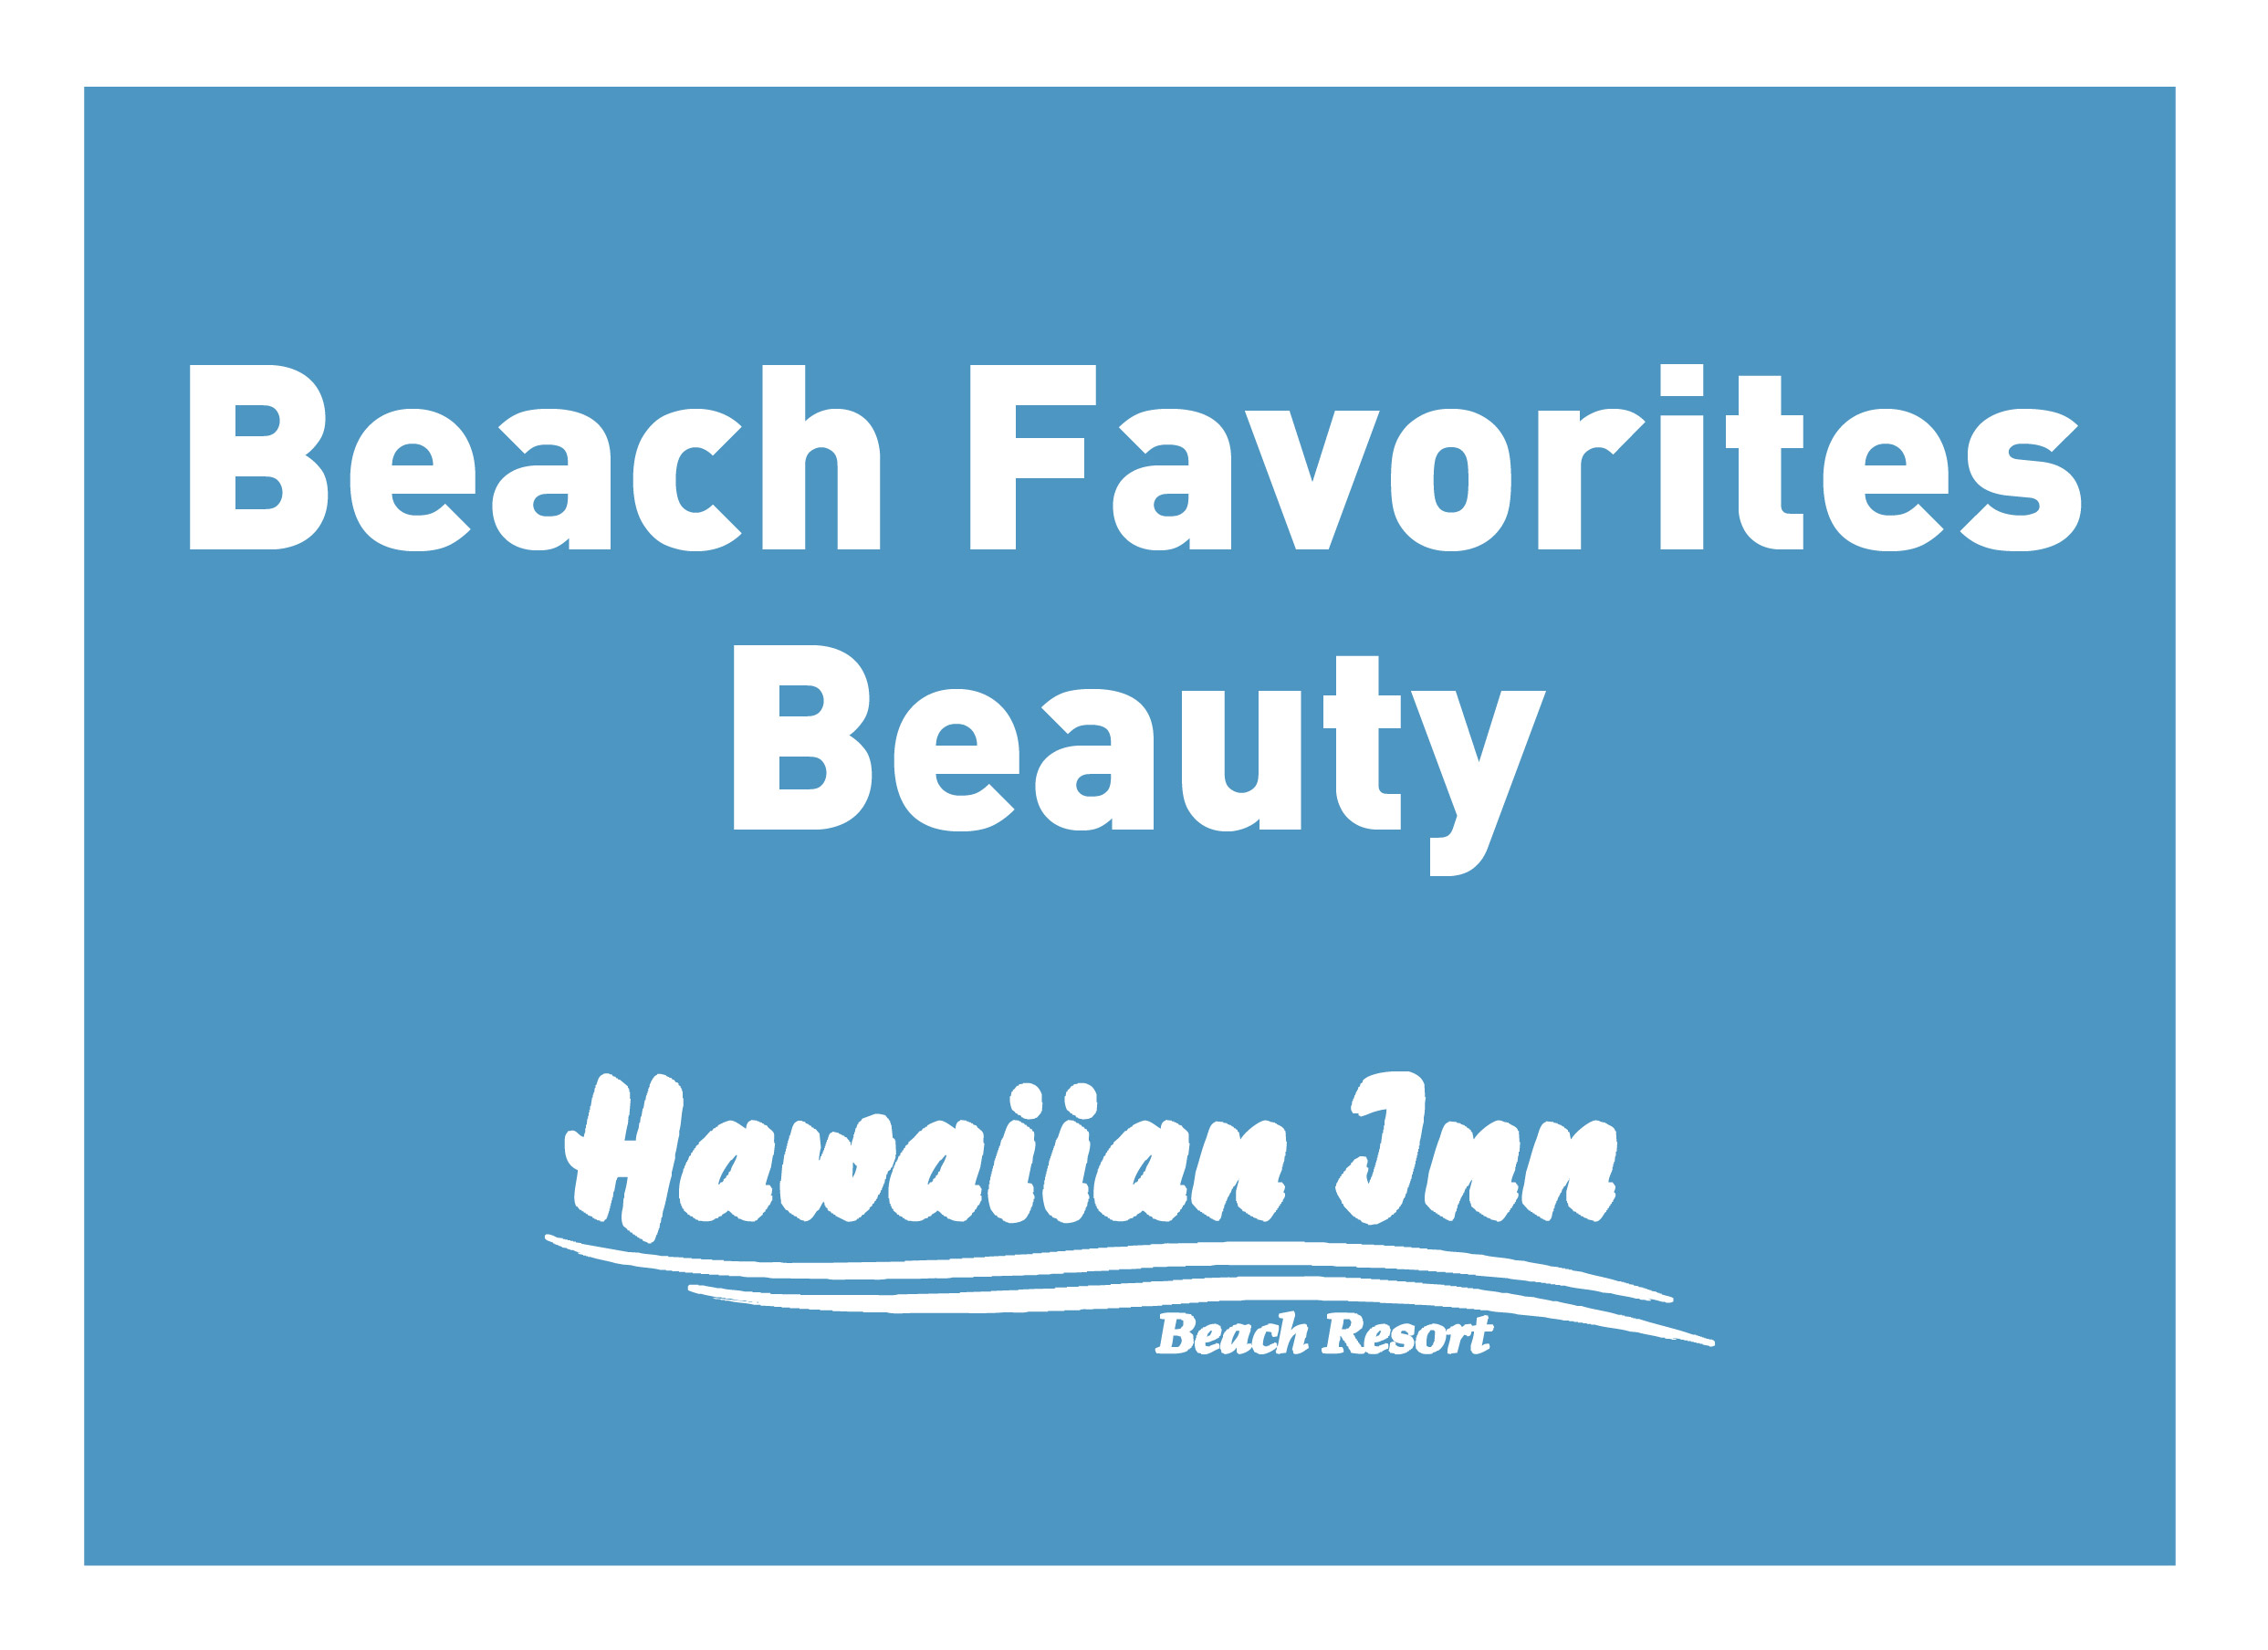 Beach Favorites - Beauty